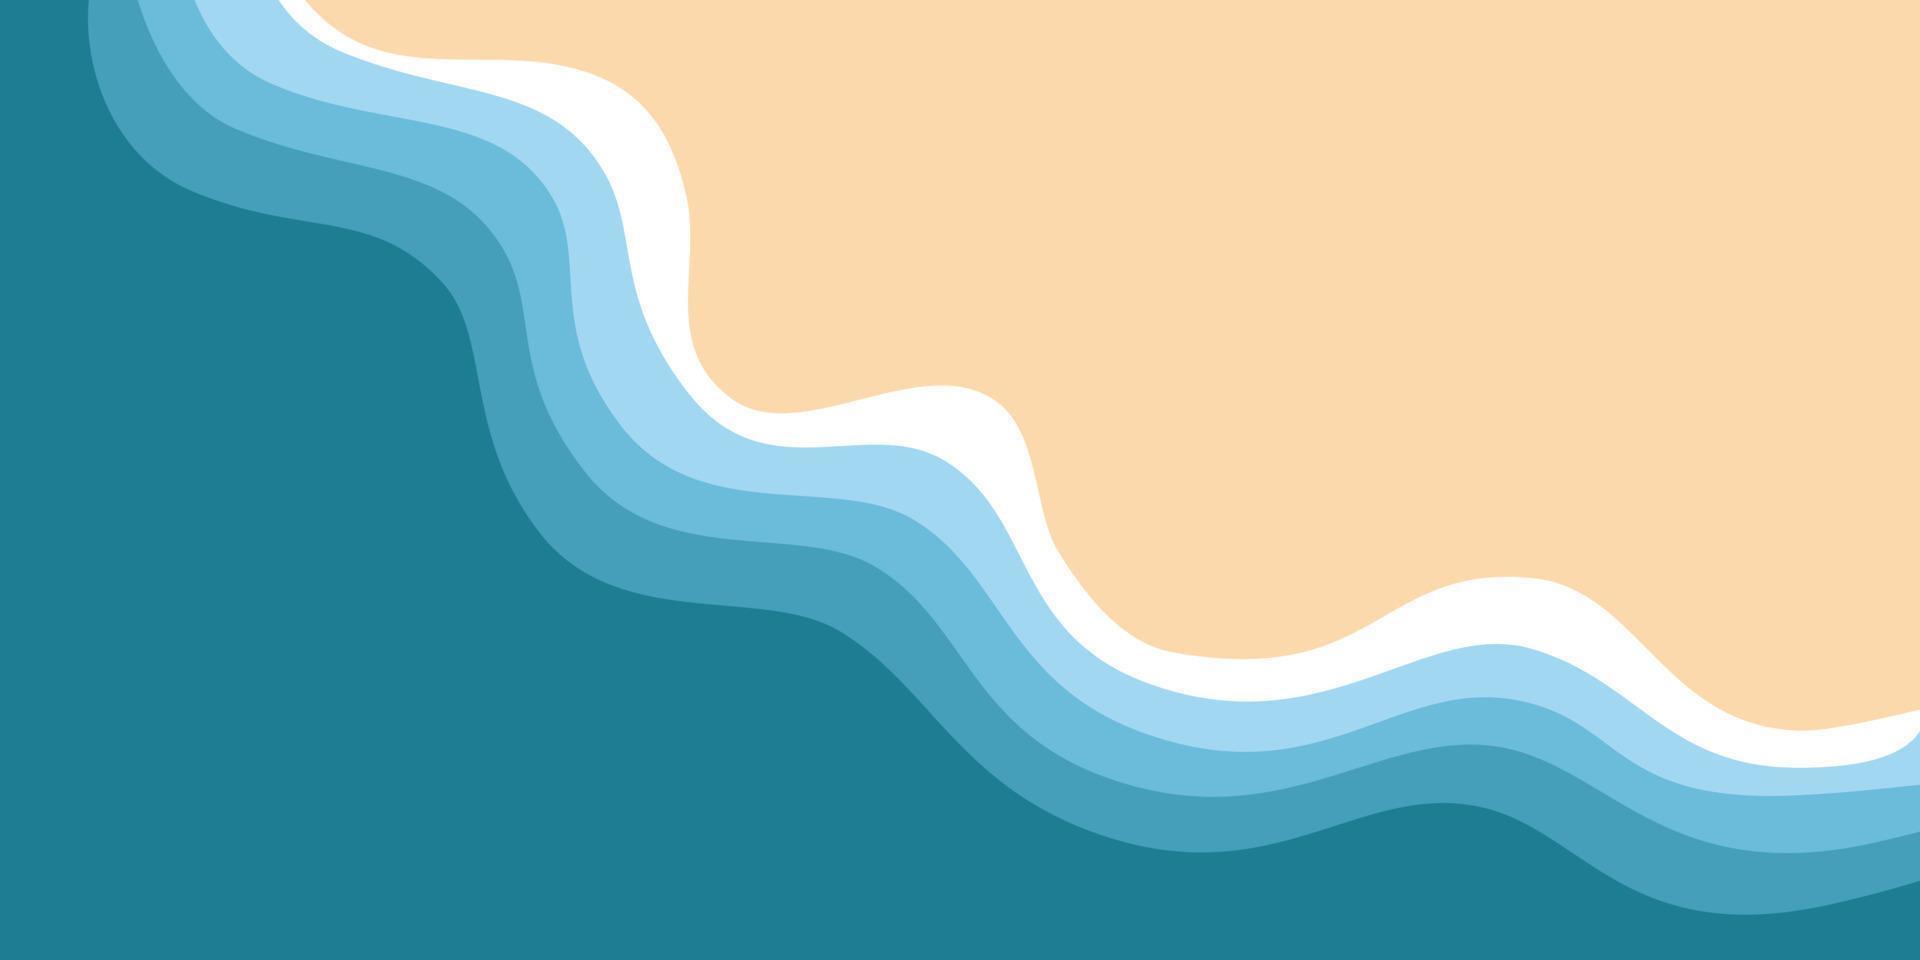 fundo abstrato do mar azul e praia de verão para banner, convite, cartaz ou design de site. vetor